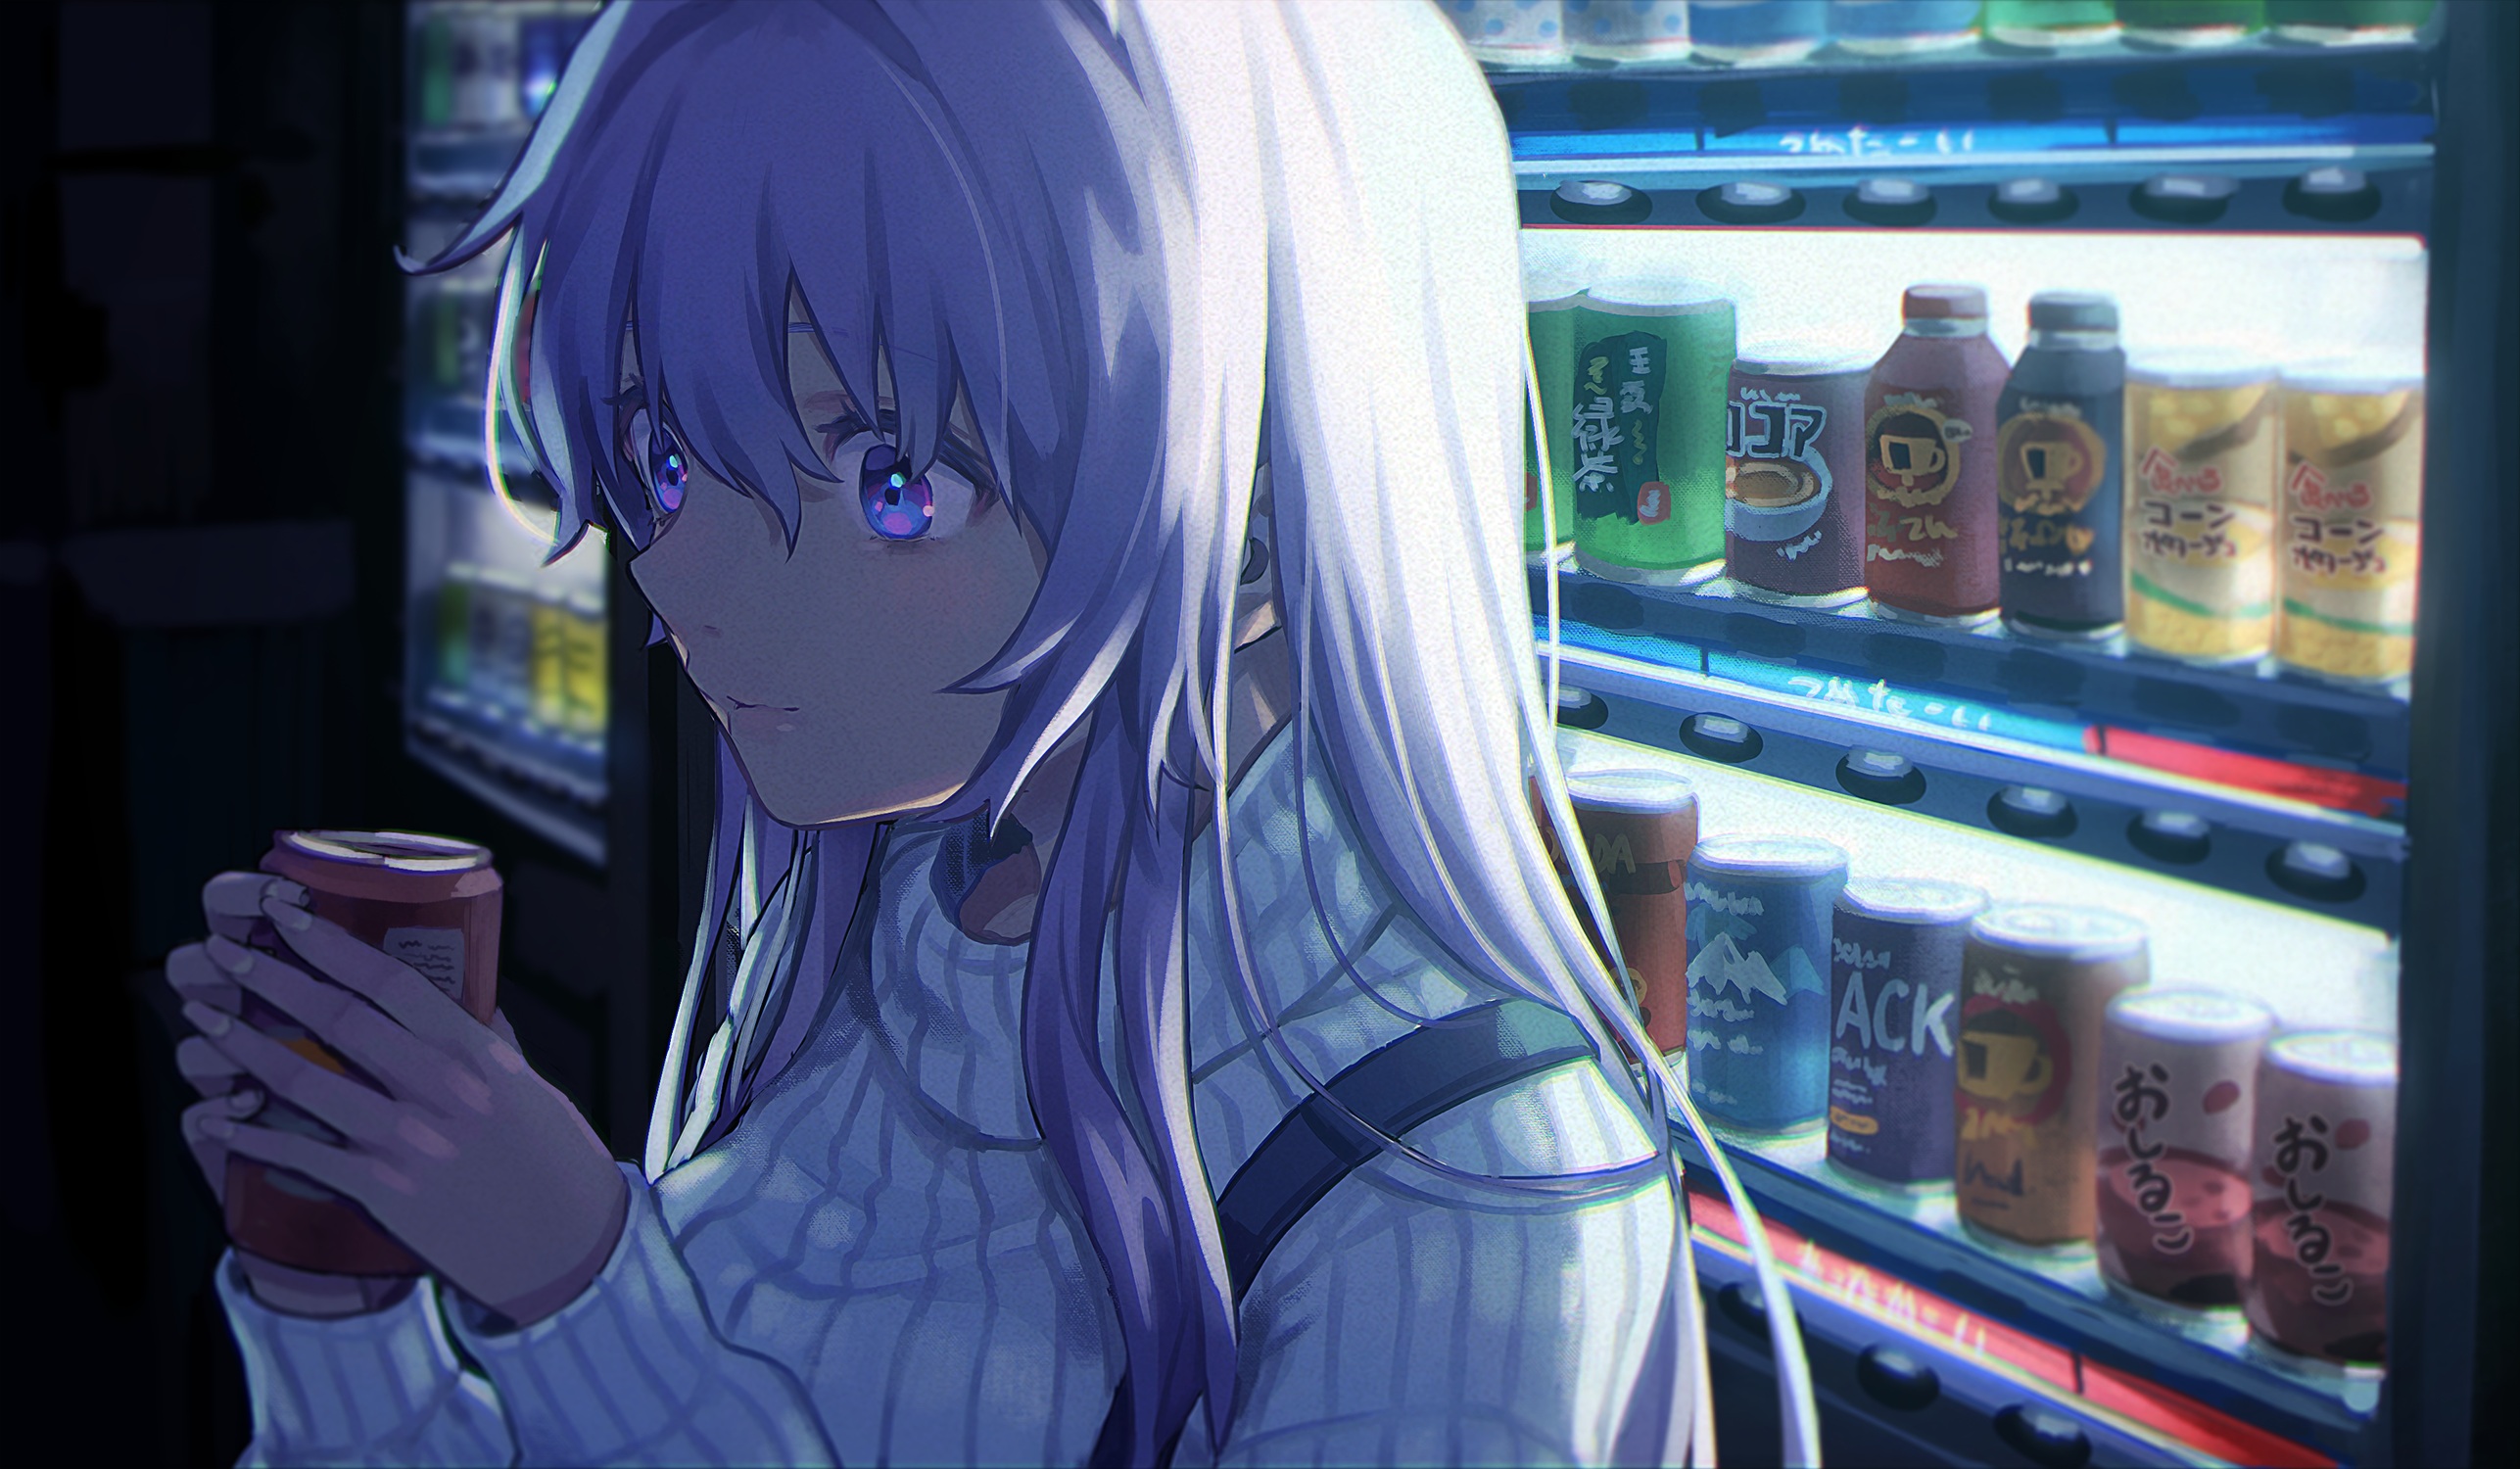 Anime 2573x1500 anime anime girls Saino artwork night vending machine